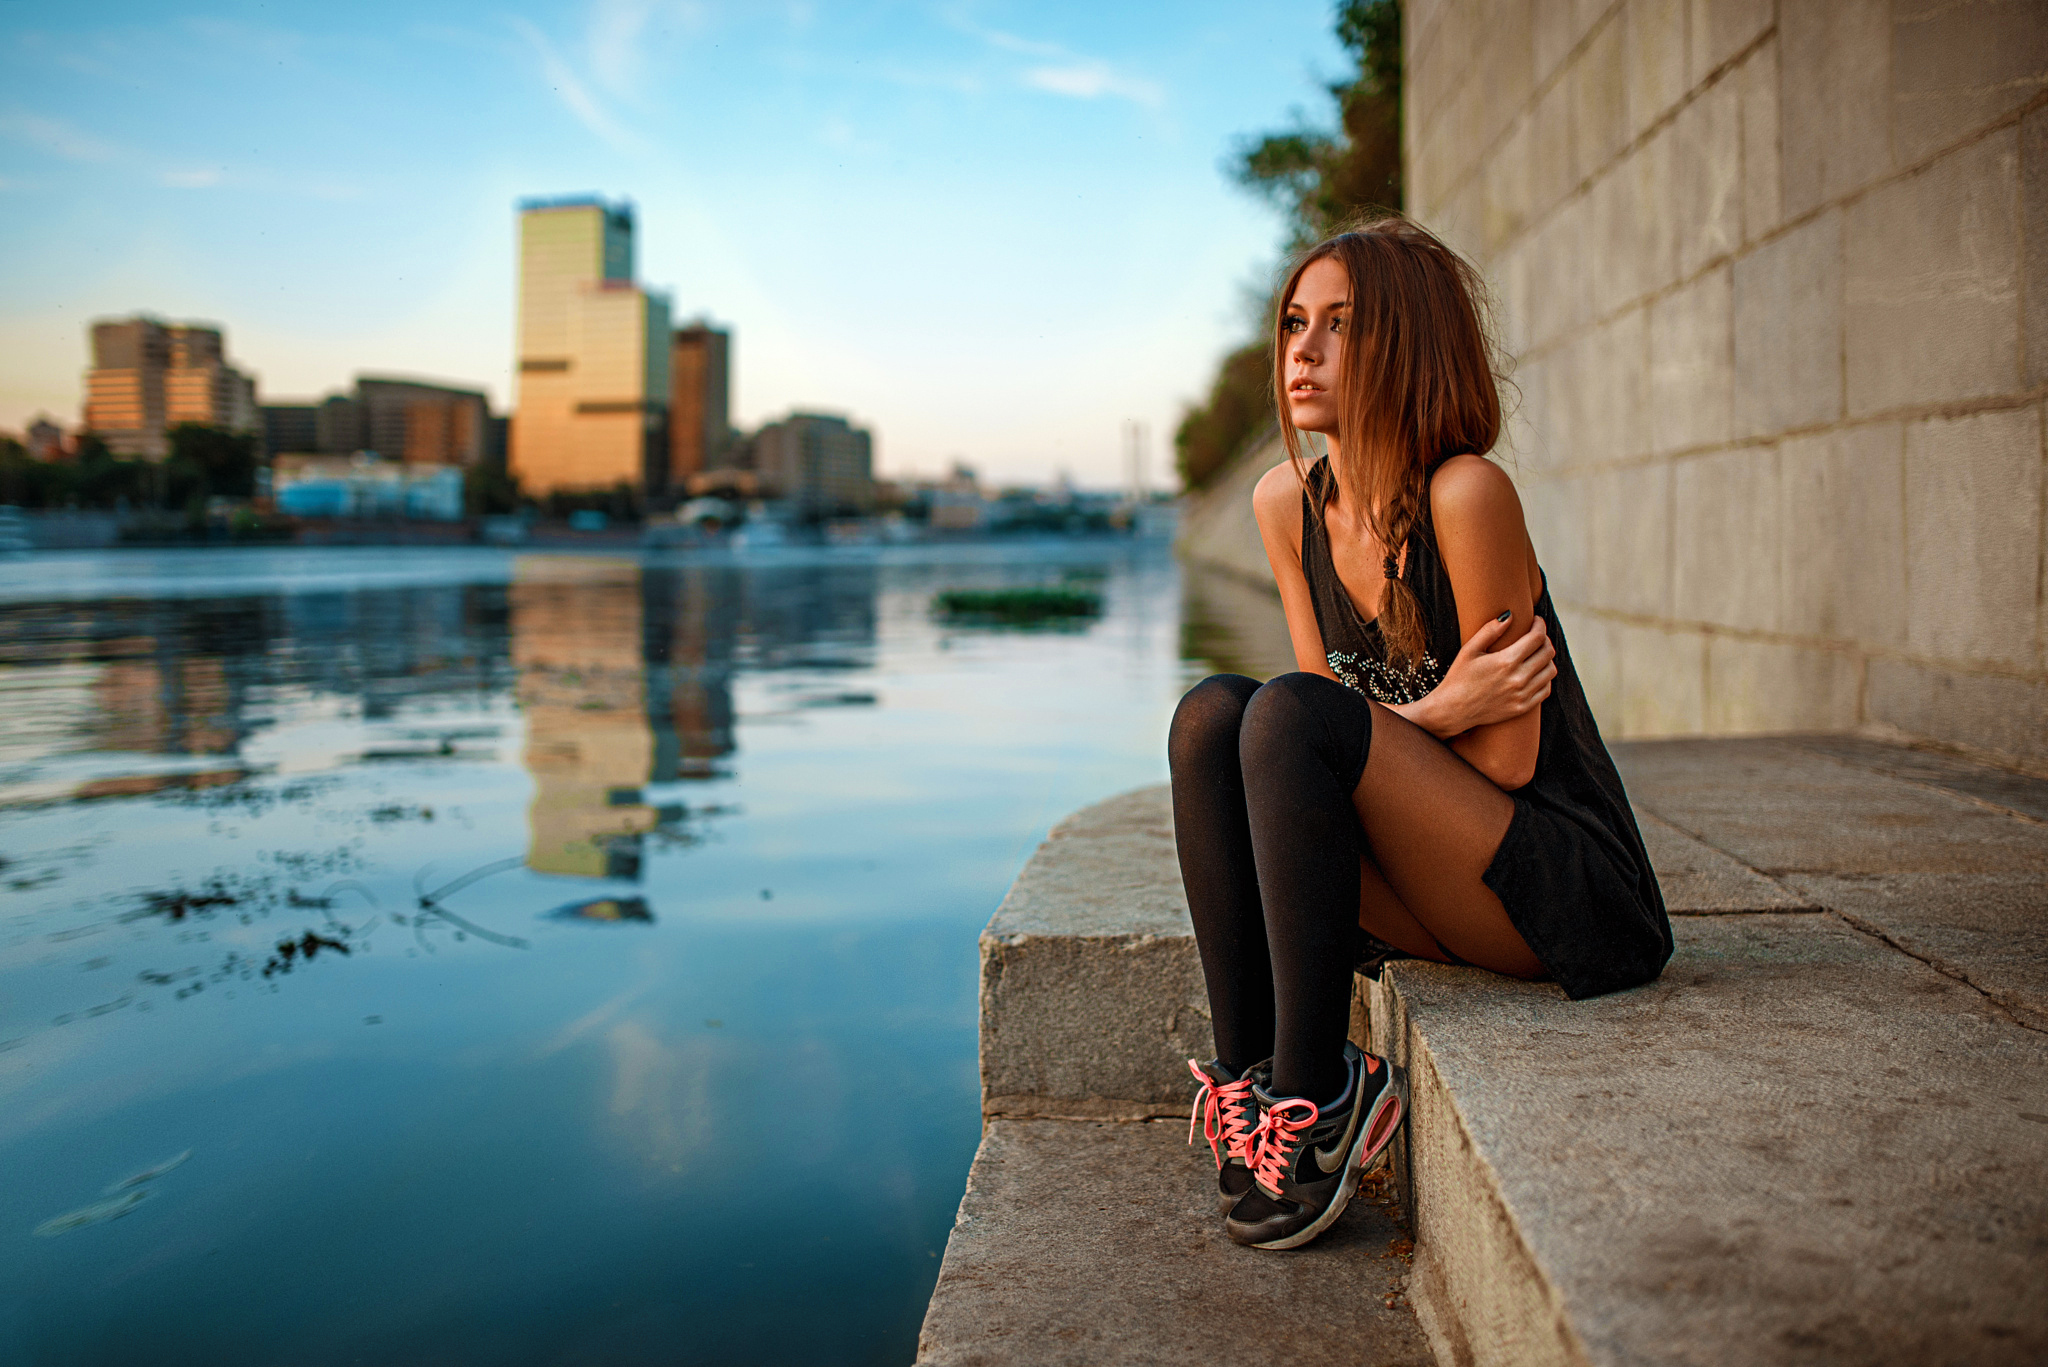 Image: Girl, Kseniya Kokoreva, stockings, sitting, waterfront, water, city, evening, river, photographer, George Chernyadev